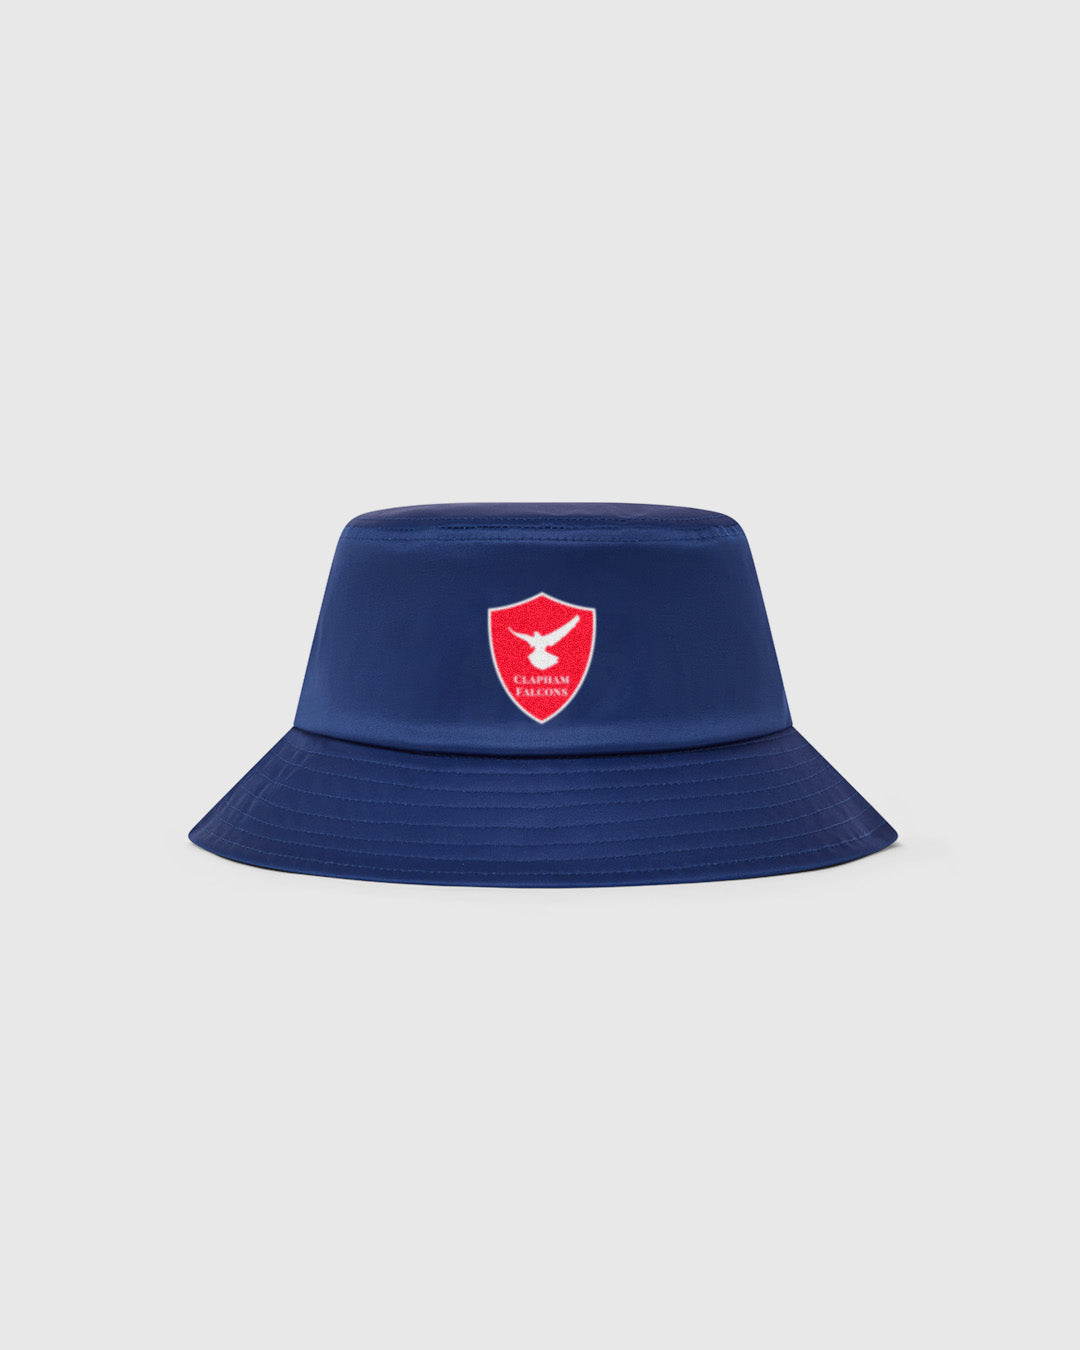 CF:007 - Clapham Falcons Bucket Hat - Navy